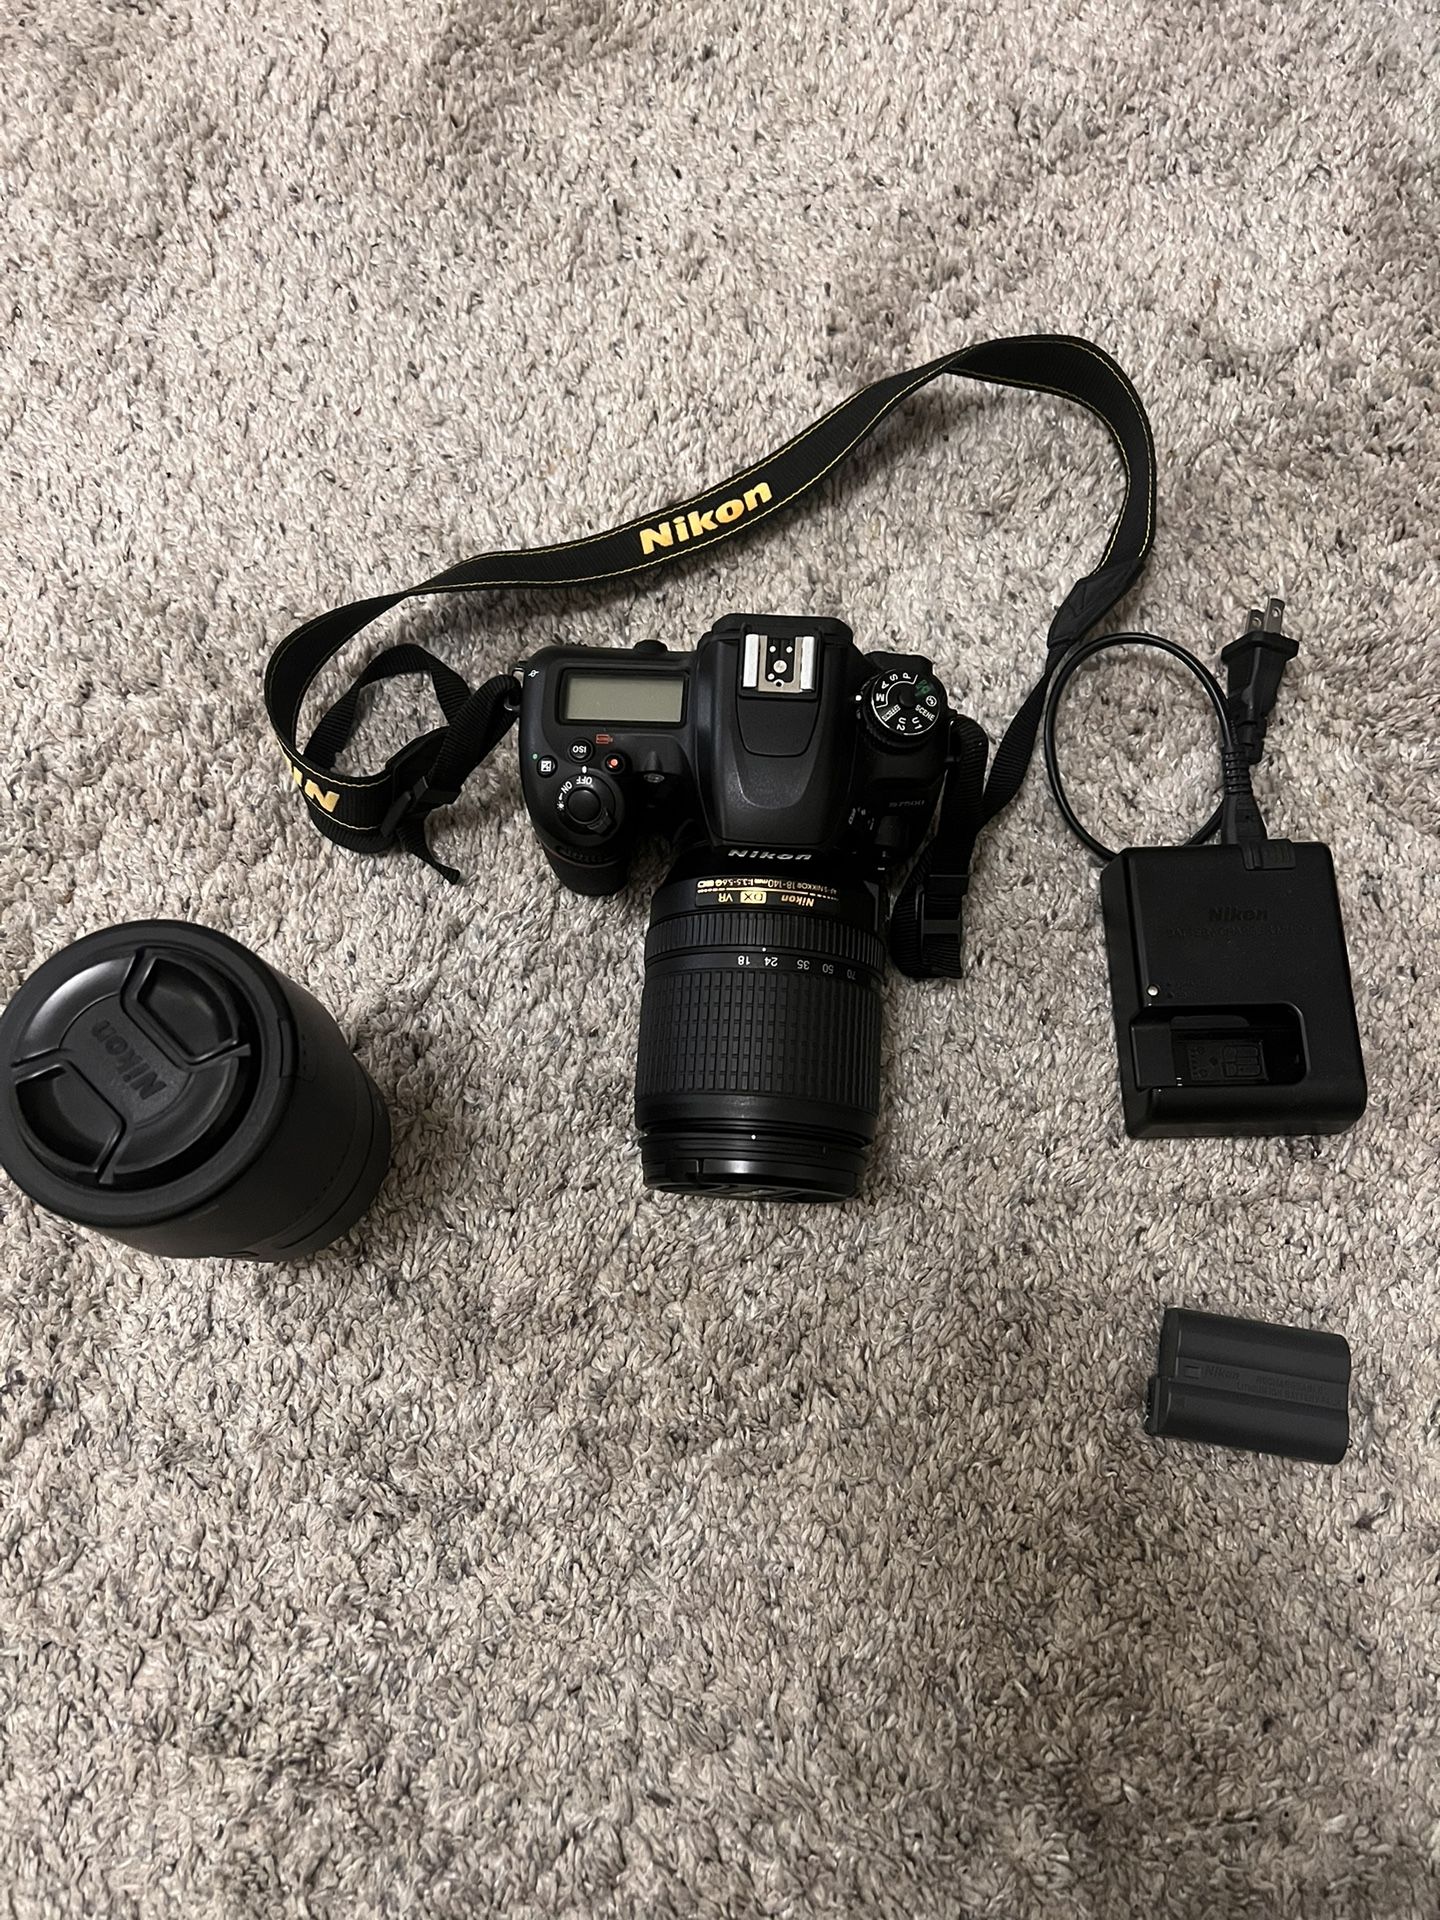 Nikon D7500 With Two Lenses 